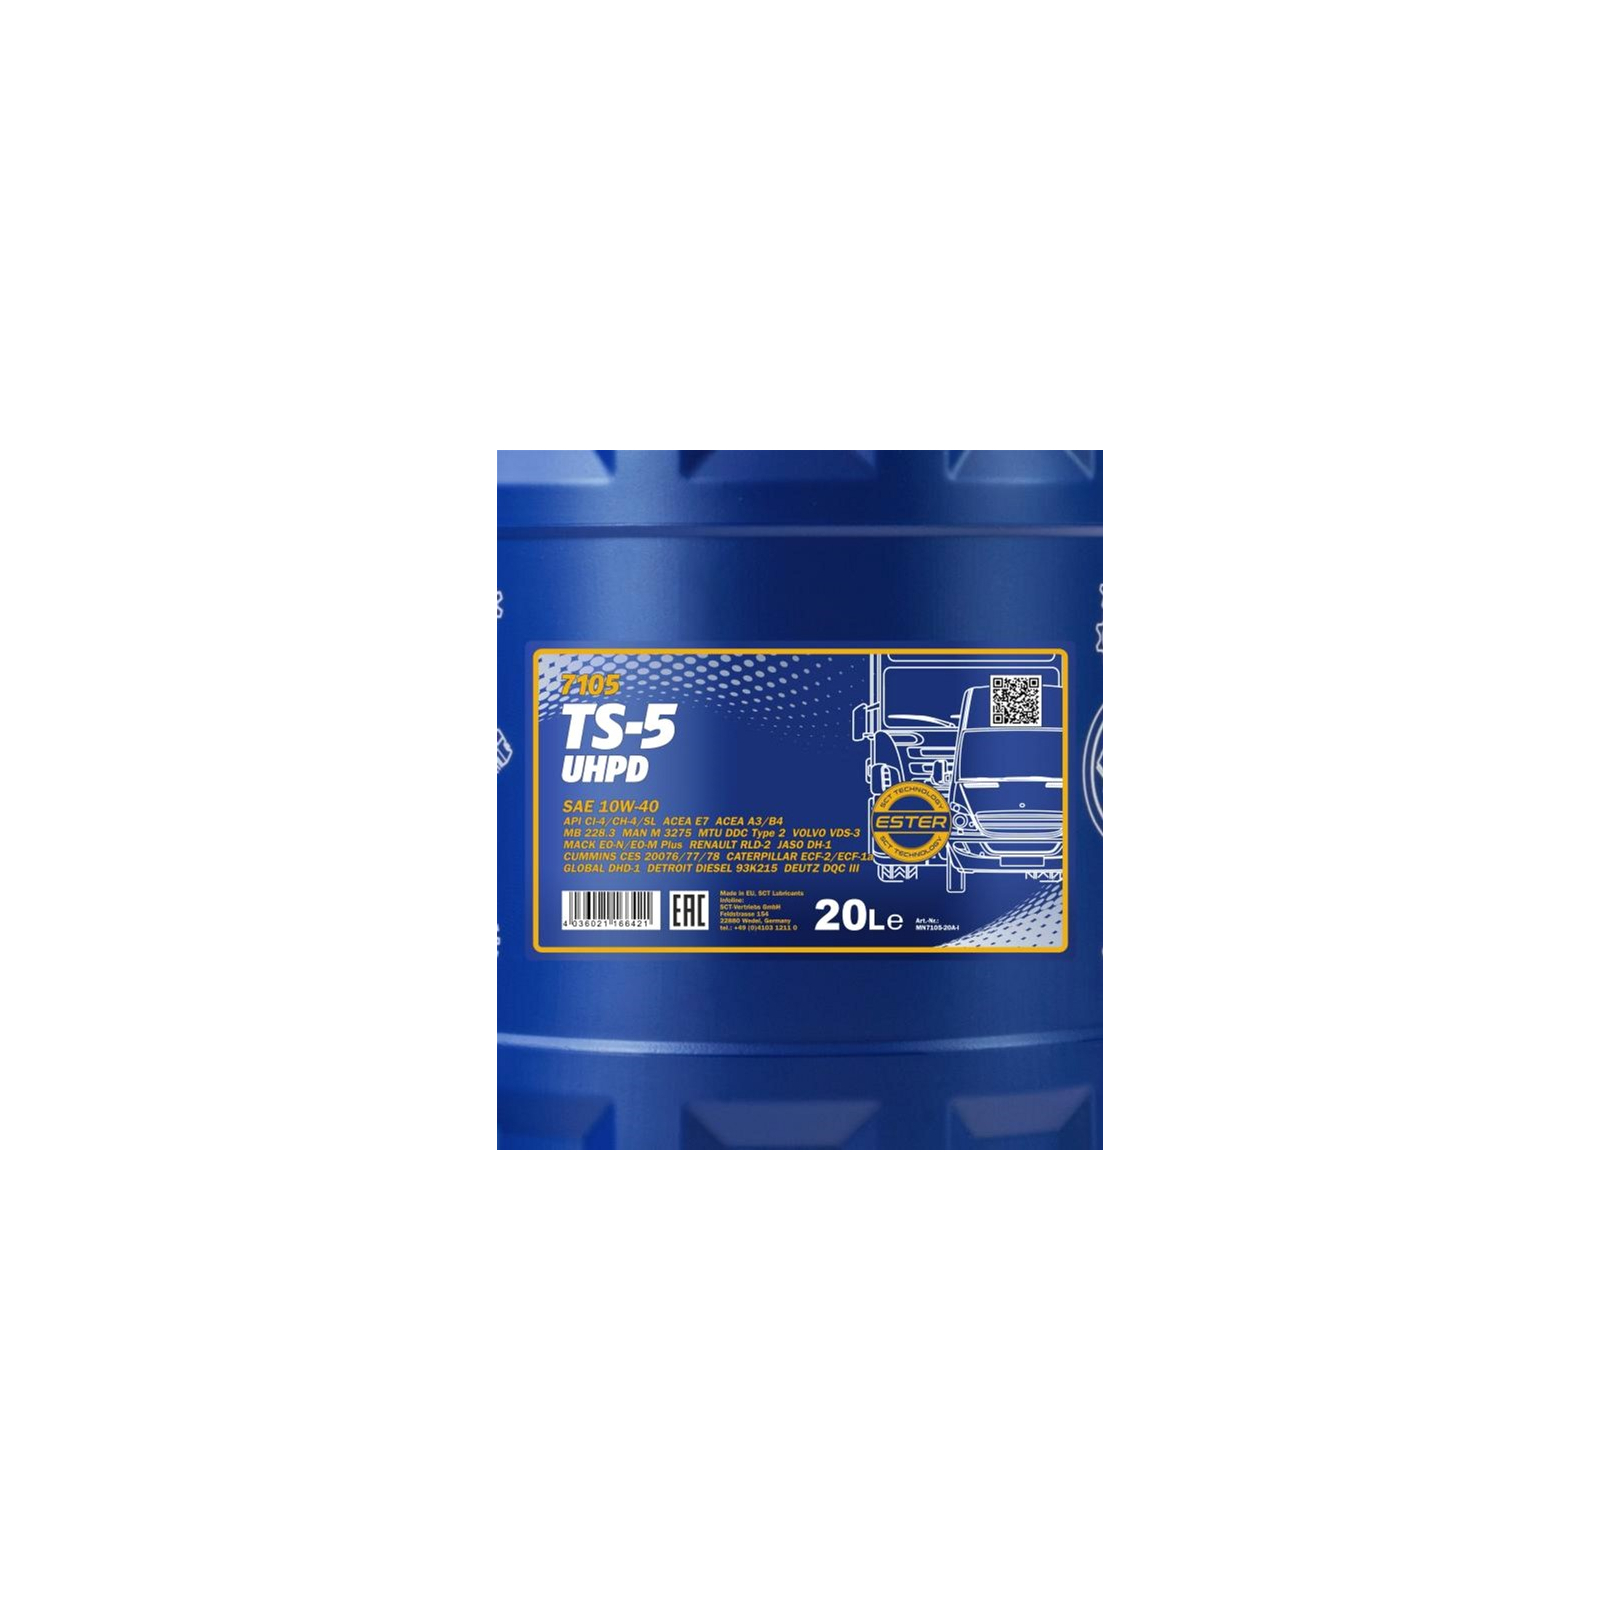 Моторное масло Mannol TS-5 UHPD 20л10W-40 (MN7105-20)